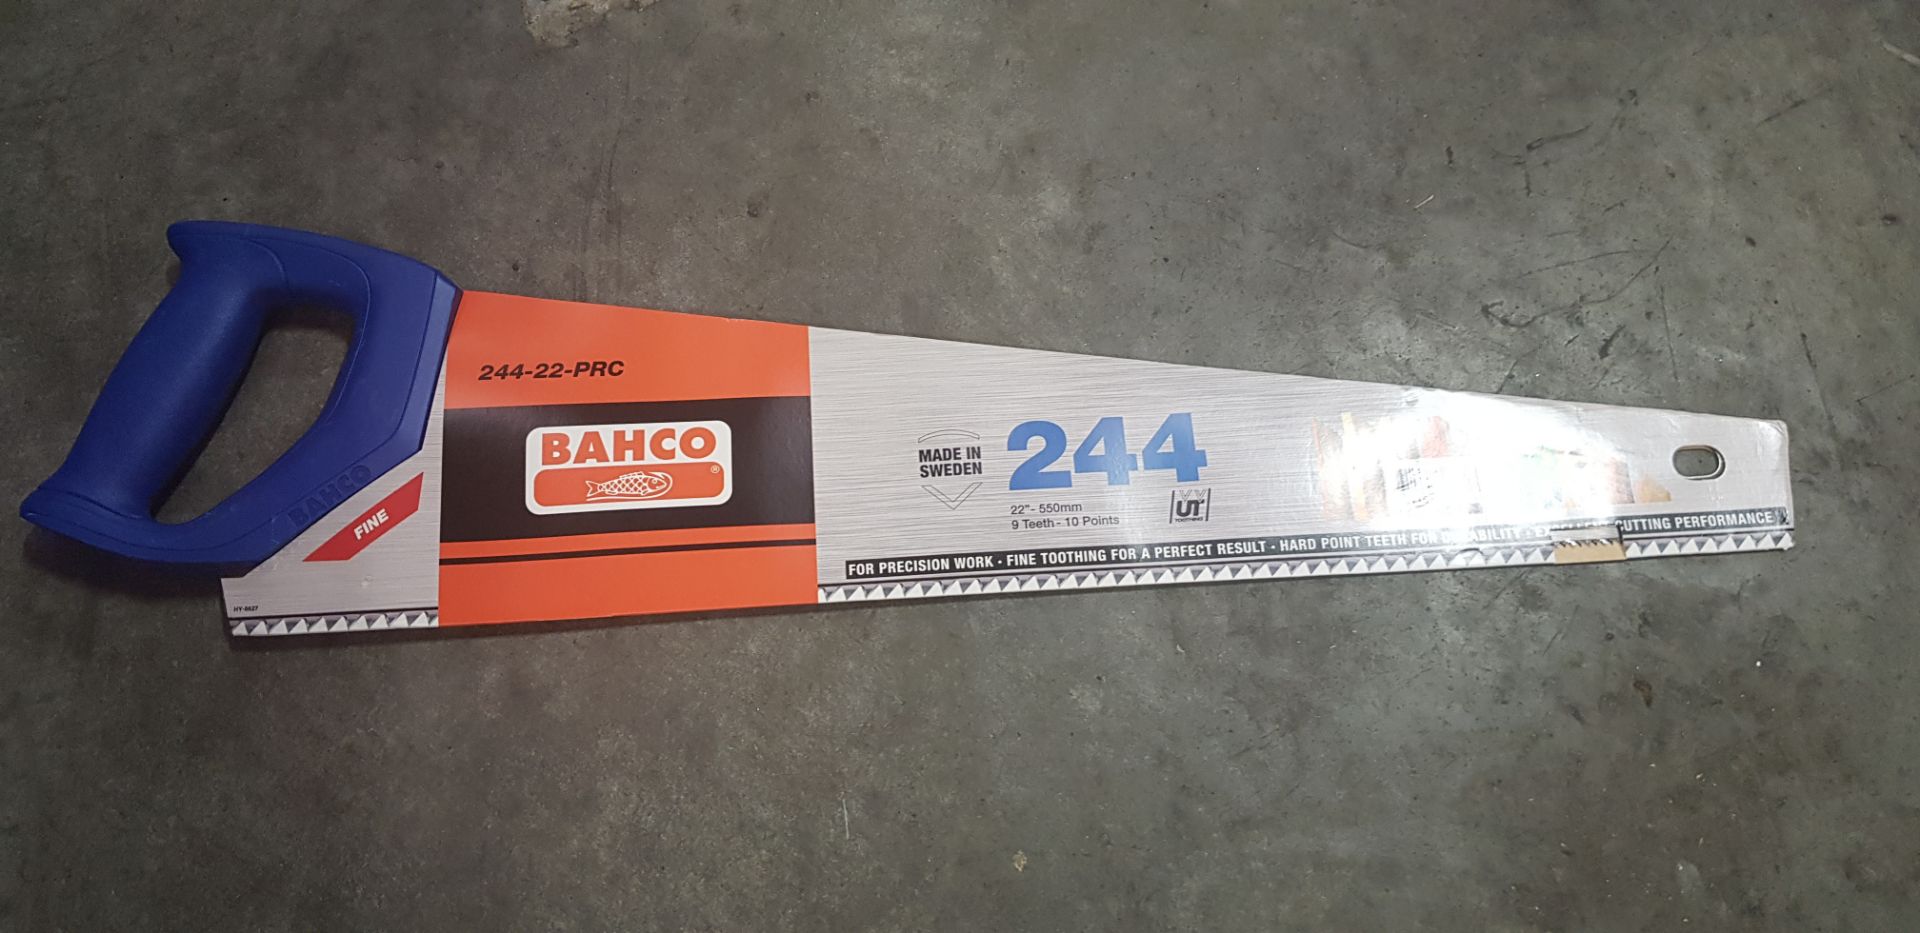 39 X BRAND NEW BAHCO 244-22-PRC PRECISION SAW 22 - 550mm 9 TEETH 10 POINTS